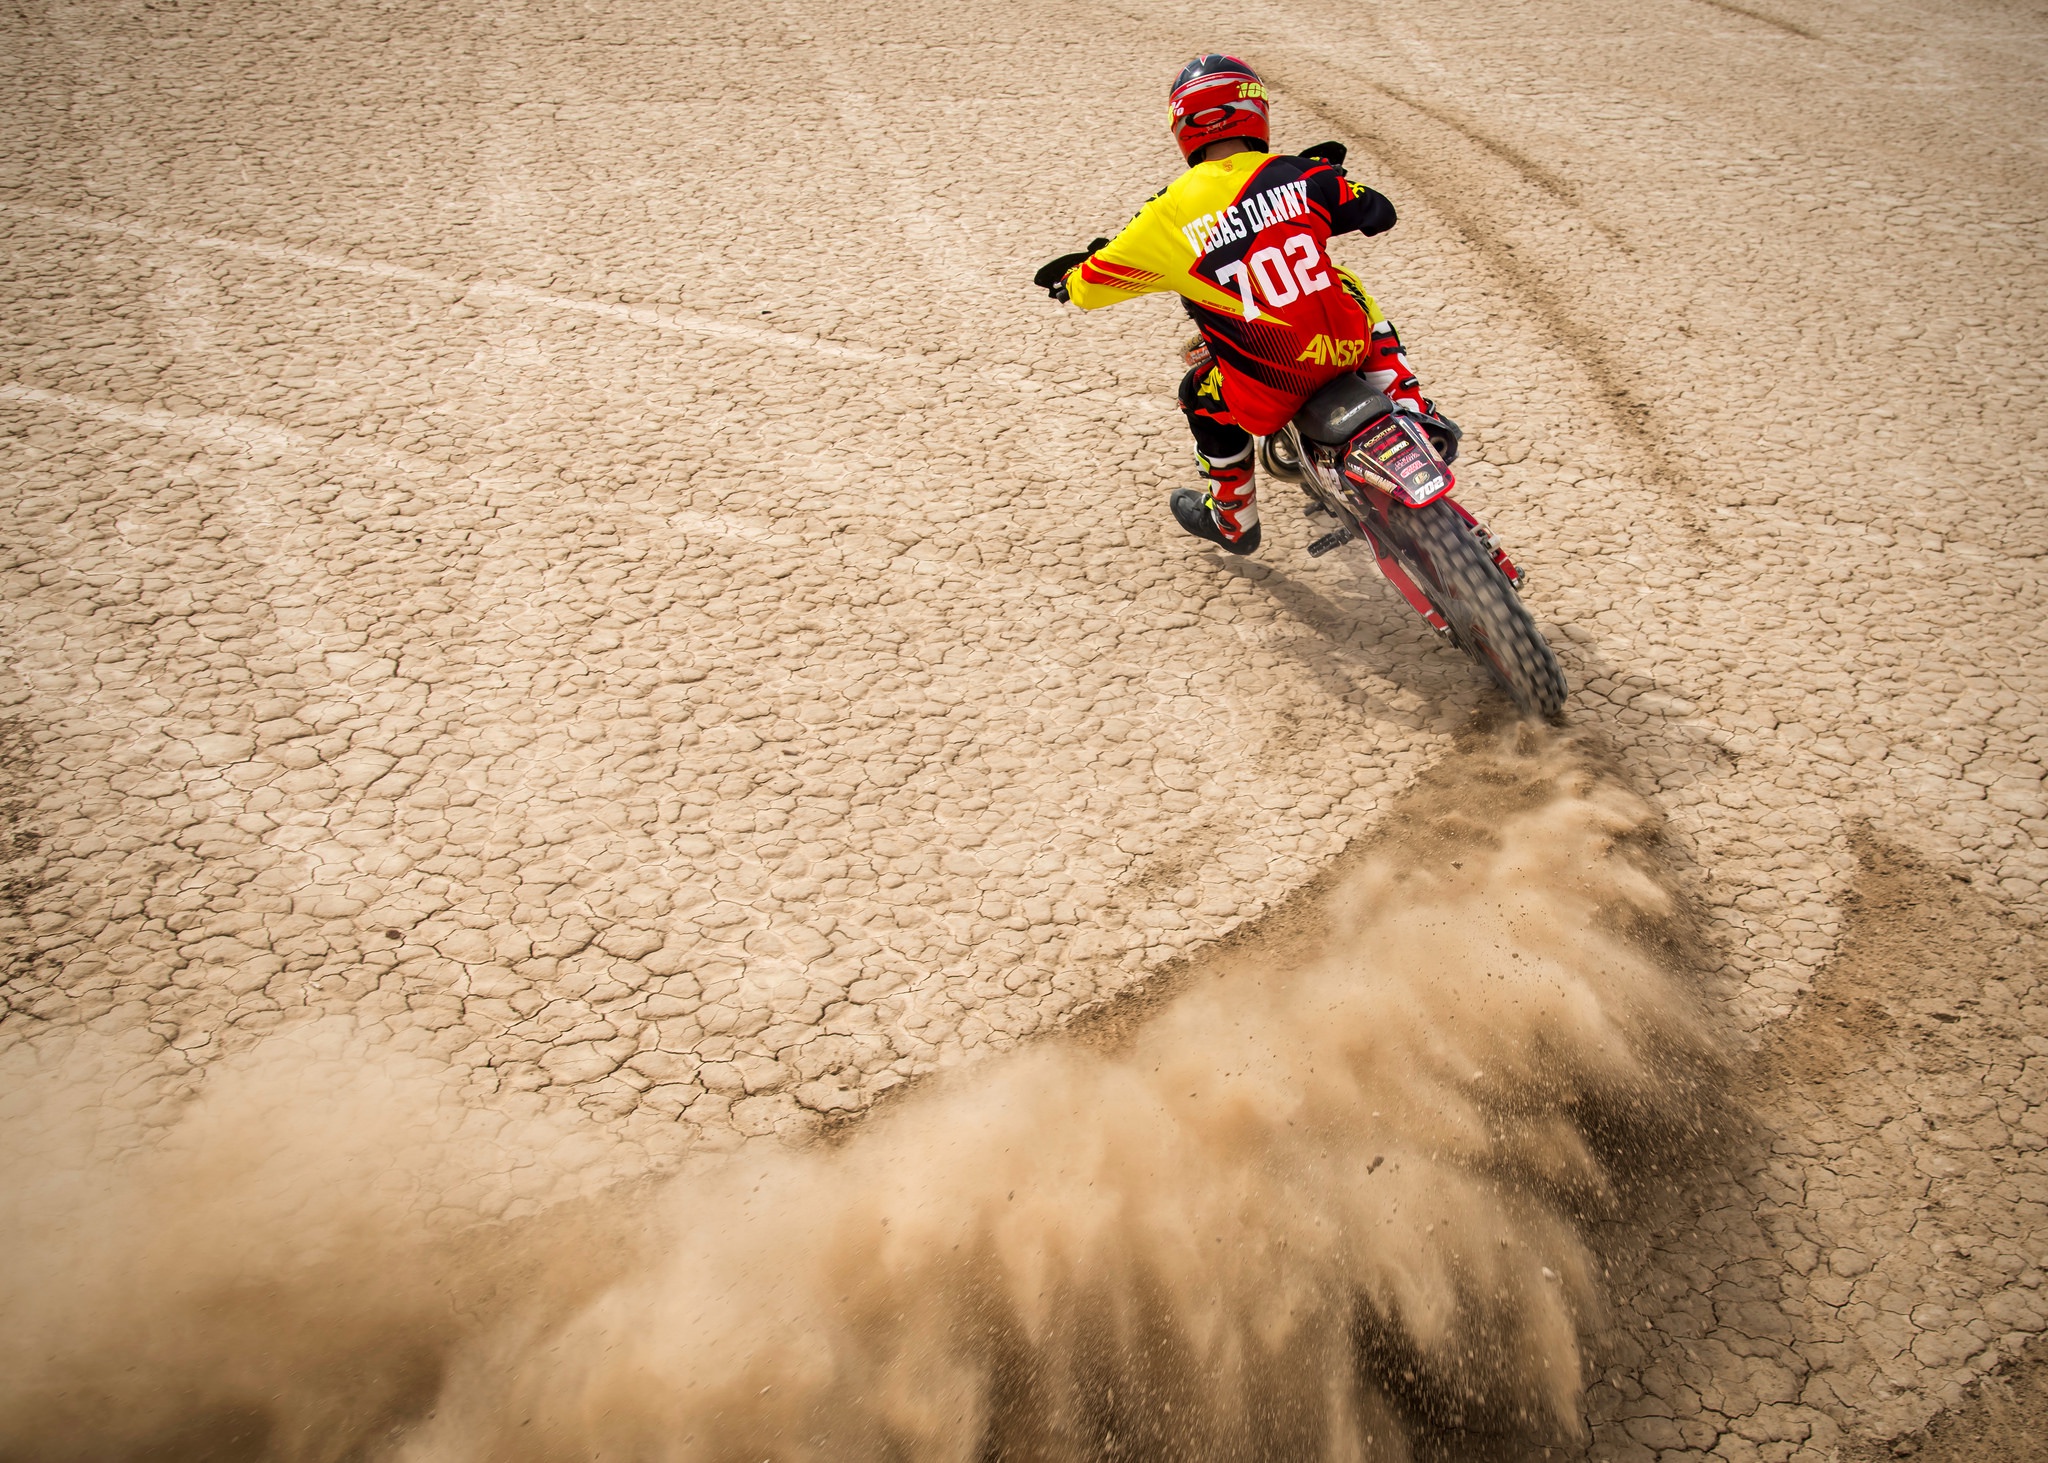 sports, motocross, dust, motorcycle, vehicle